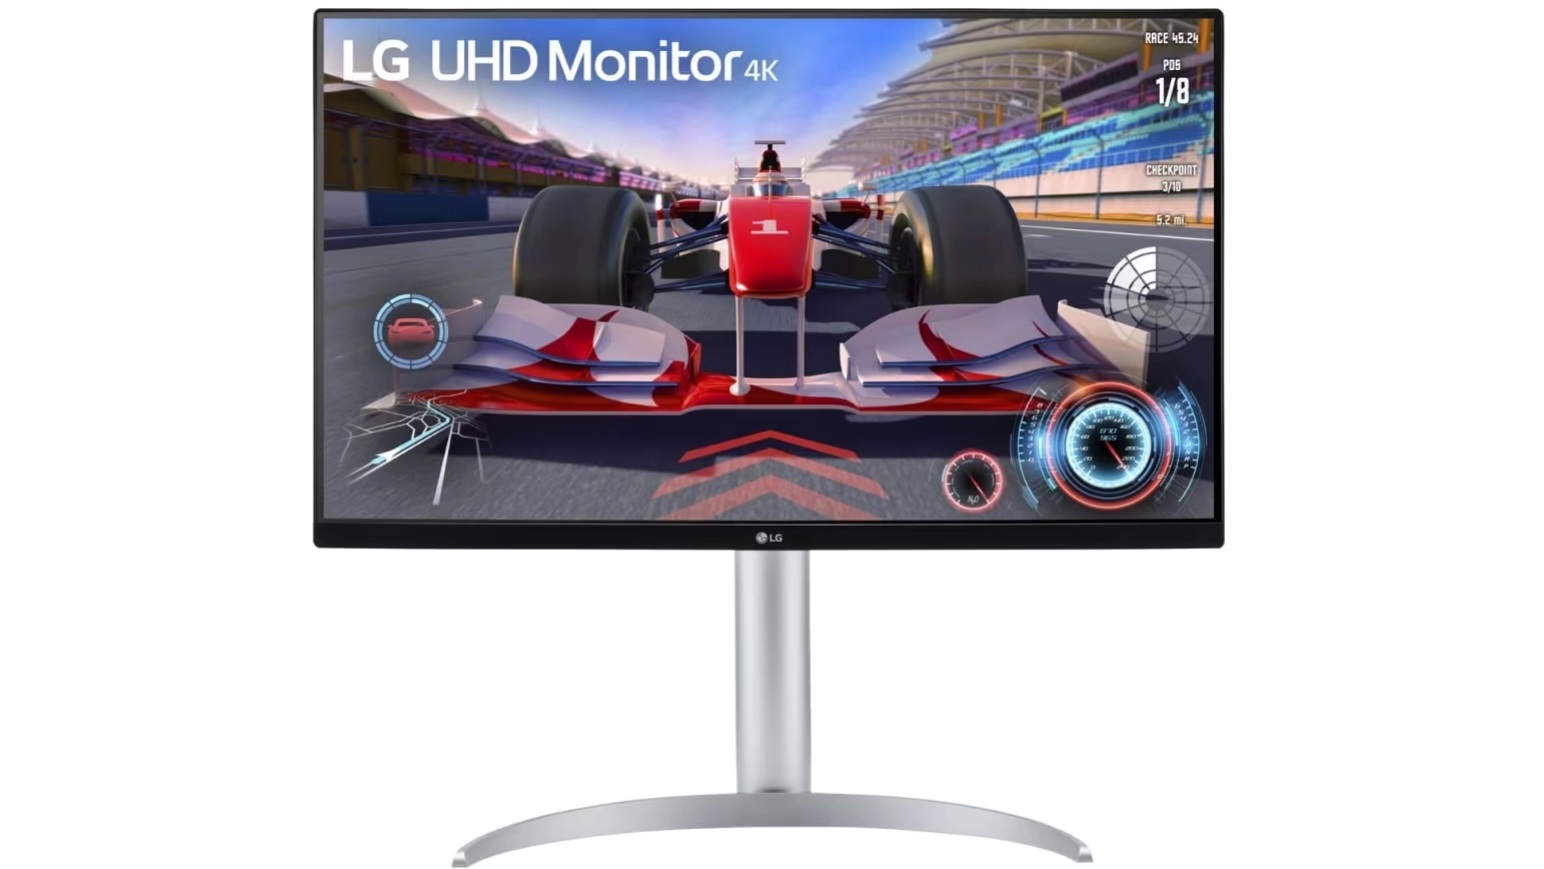 LG kondigt een 4K gamingmonitor aan met 144Hz framerate, HDMI 2.1 en DisplayPort 1.4